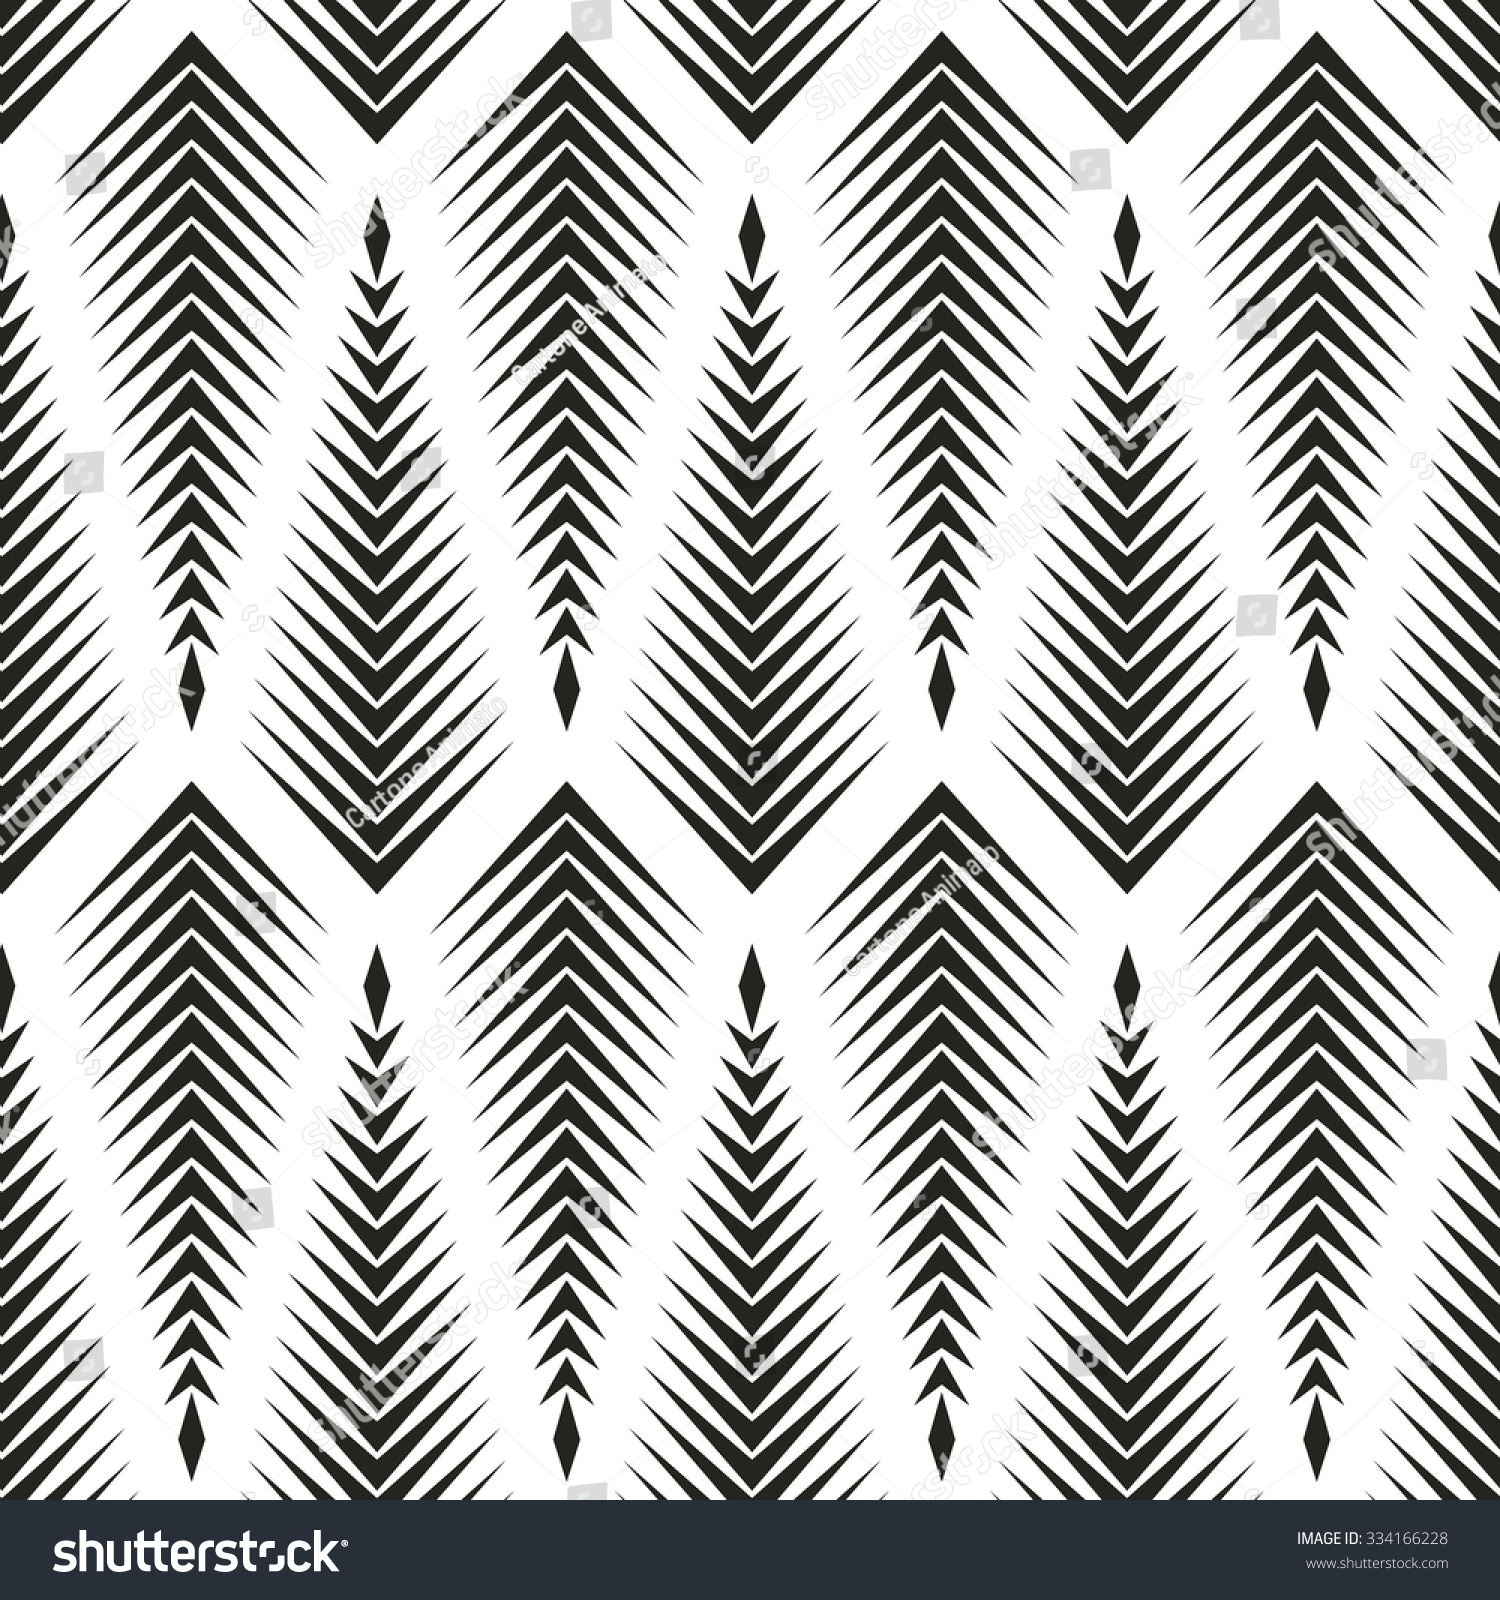 Spruce in monochrome pattern, geometric pattern, seamless vector background.